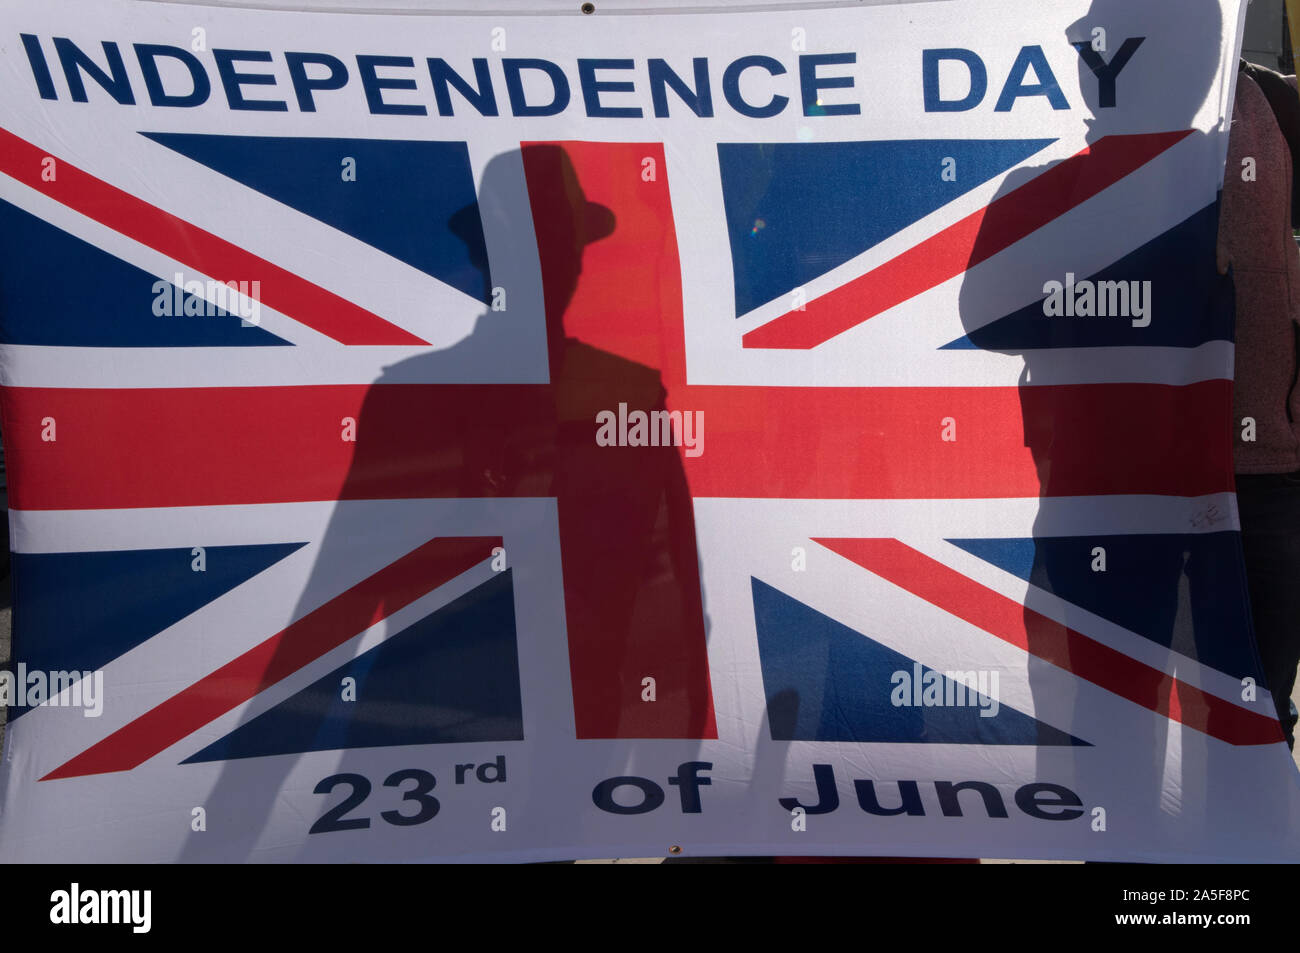 Brexit Group of Leavers, Brexiteers with Union Jack flag Independence Day 23 giugno 2016 la data del referendum per lasciare l'Unione europea. Super sabato 19 ottobre 2019 Parliament Square Londra 2010s UK HOMER SYKES Foto Stock